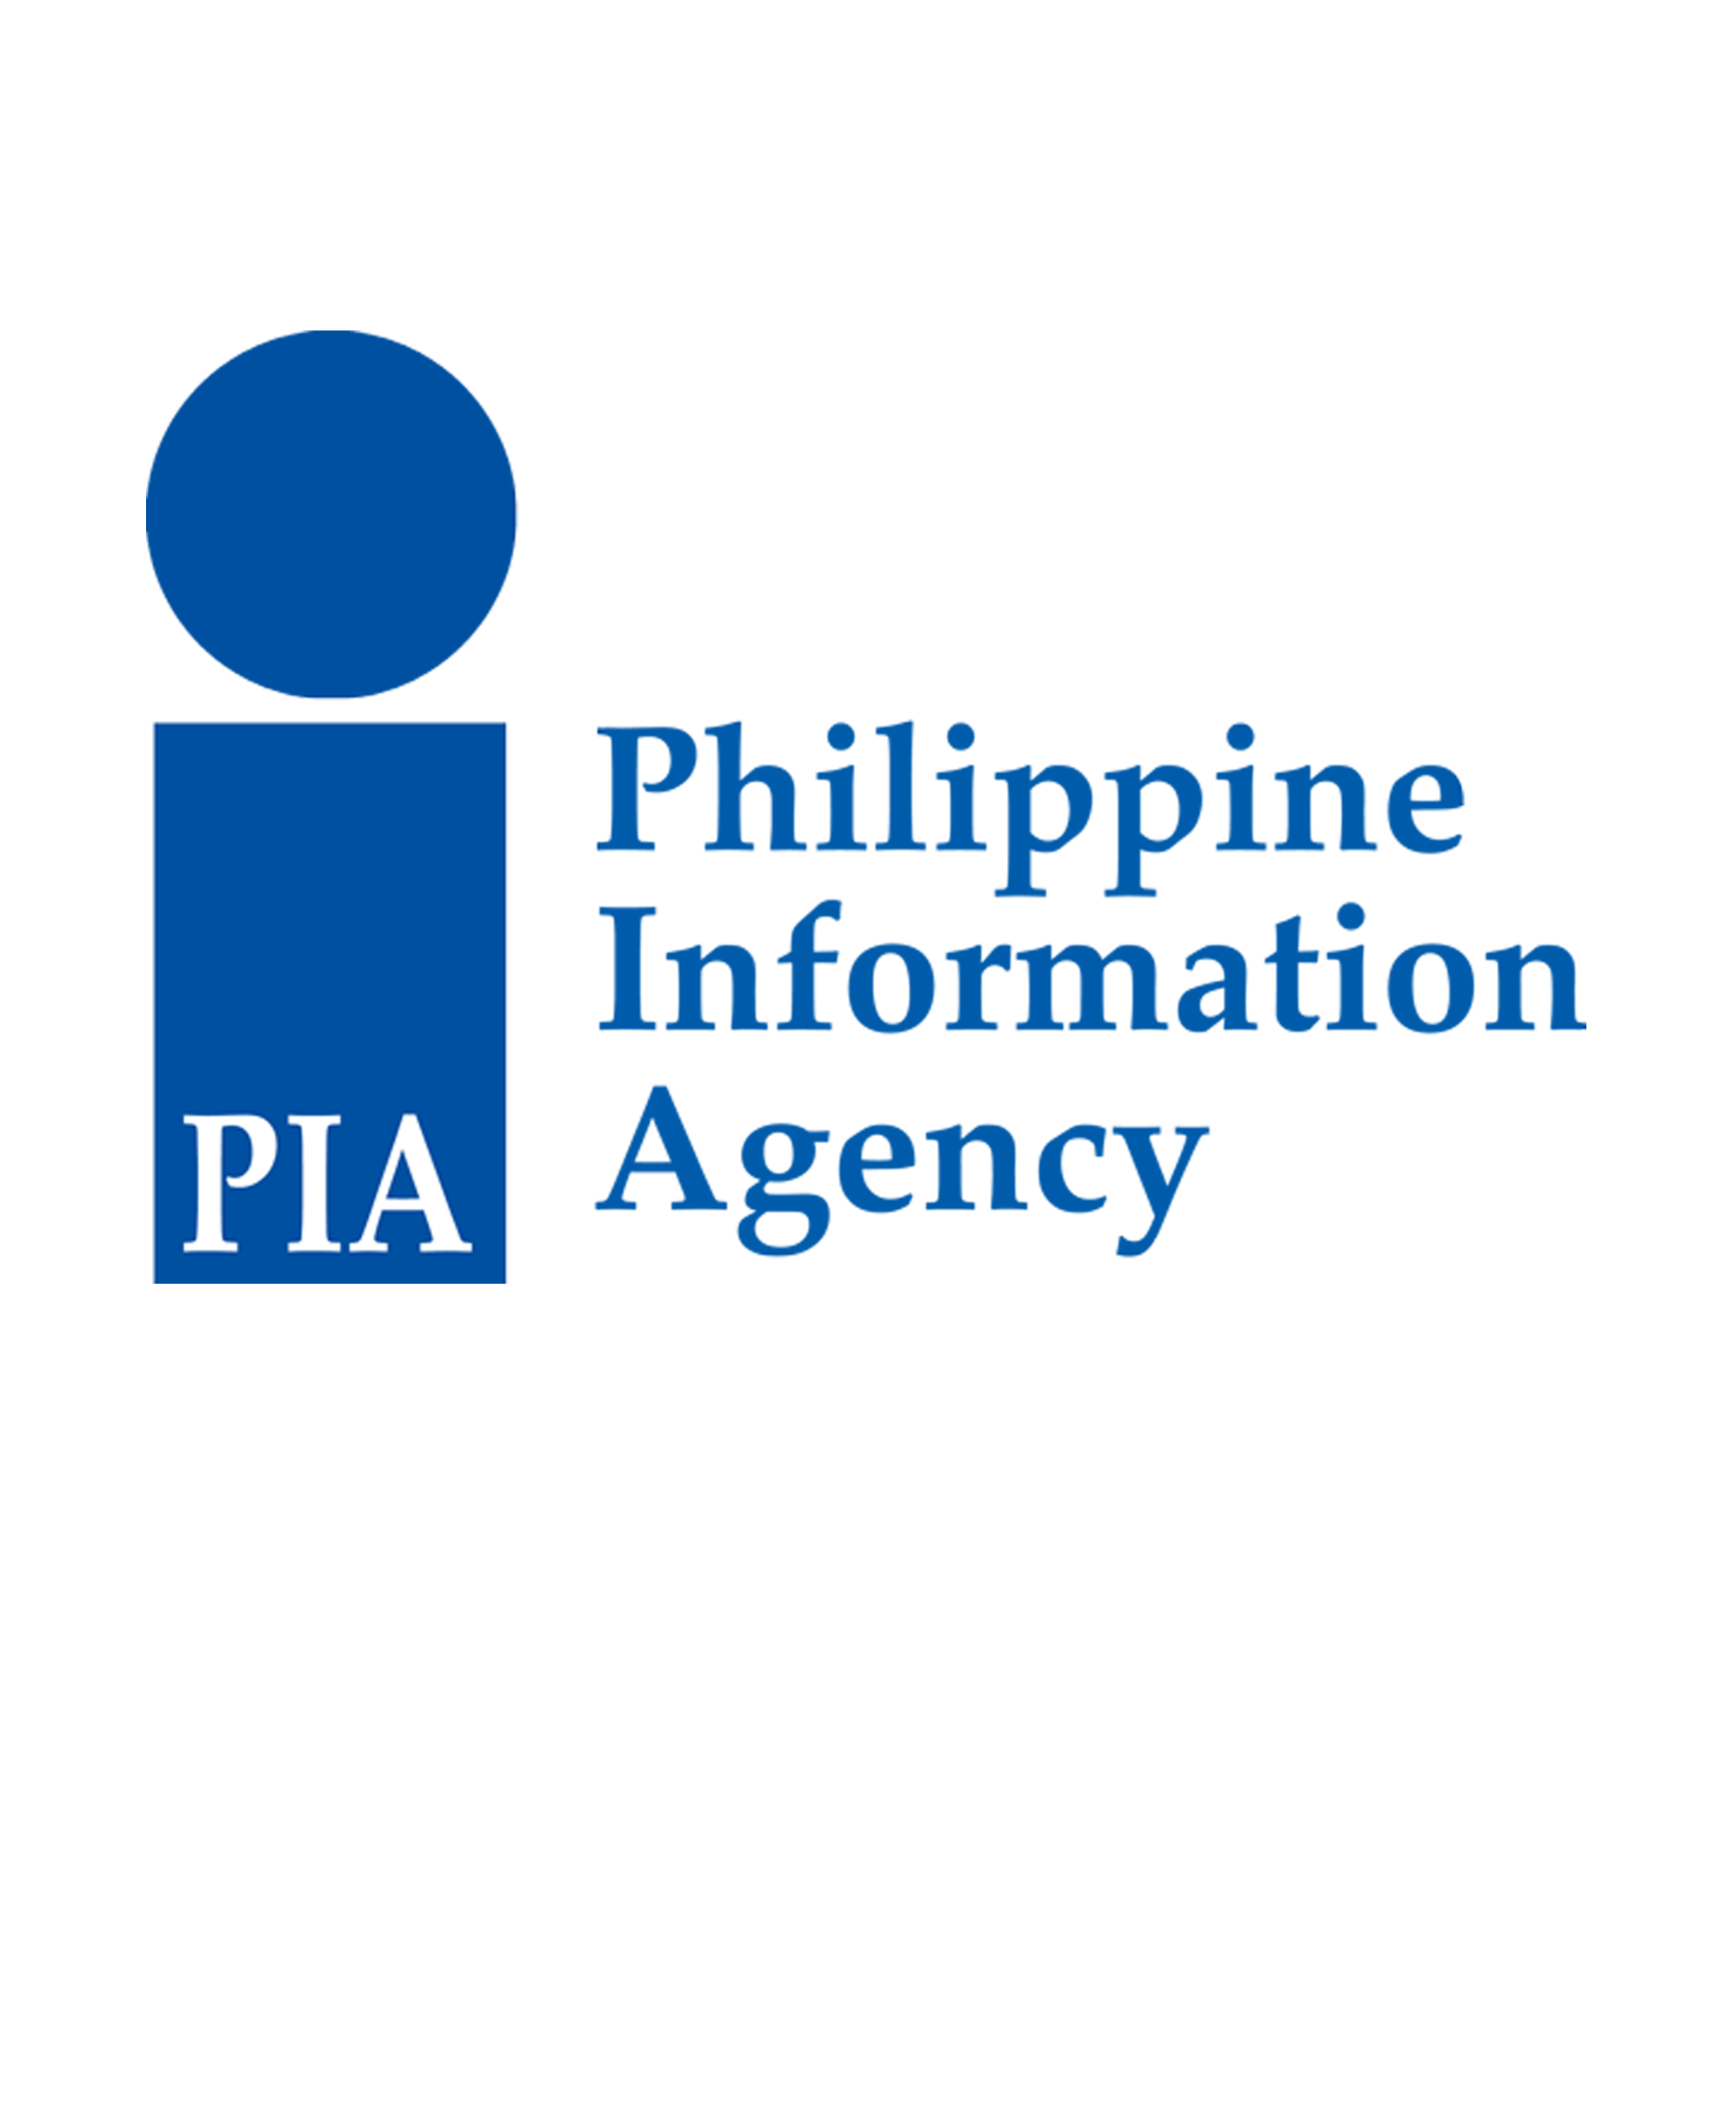 Philippine Information Agency